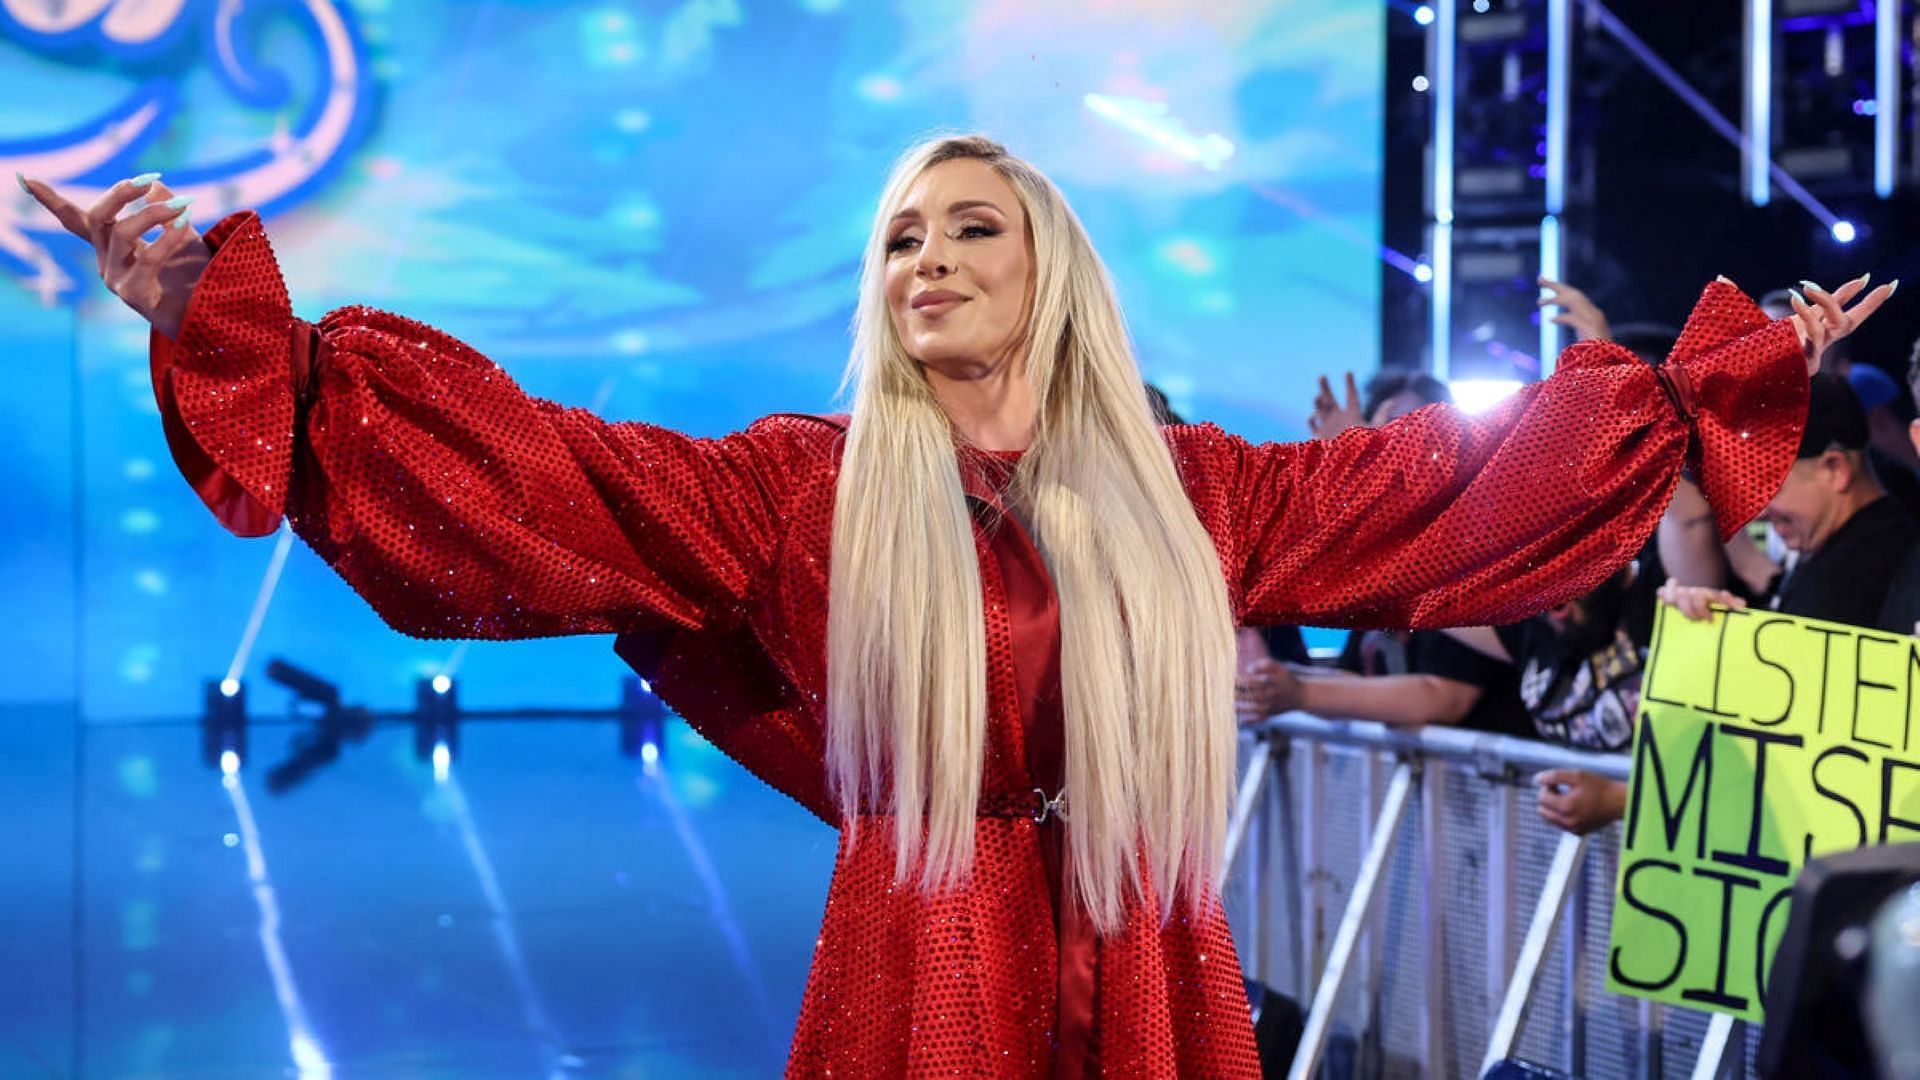 Charlotte Flair poses on WWE SmackDown